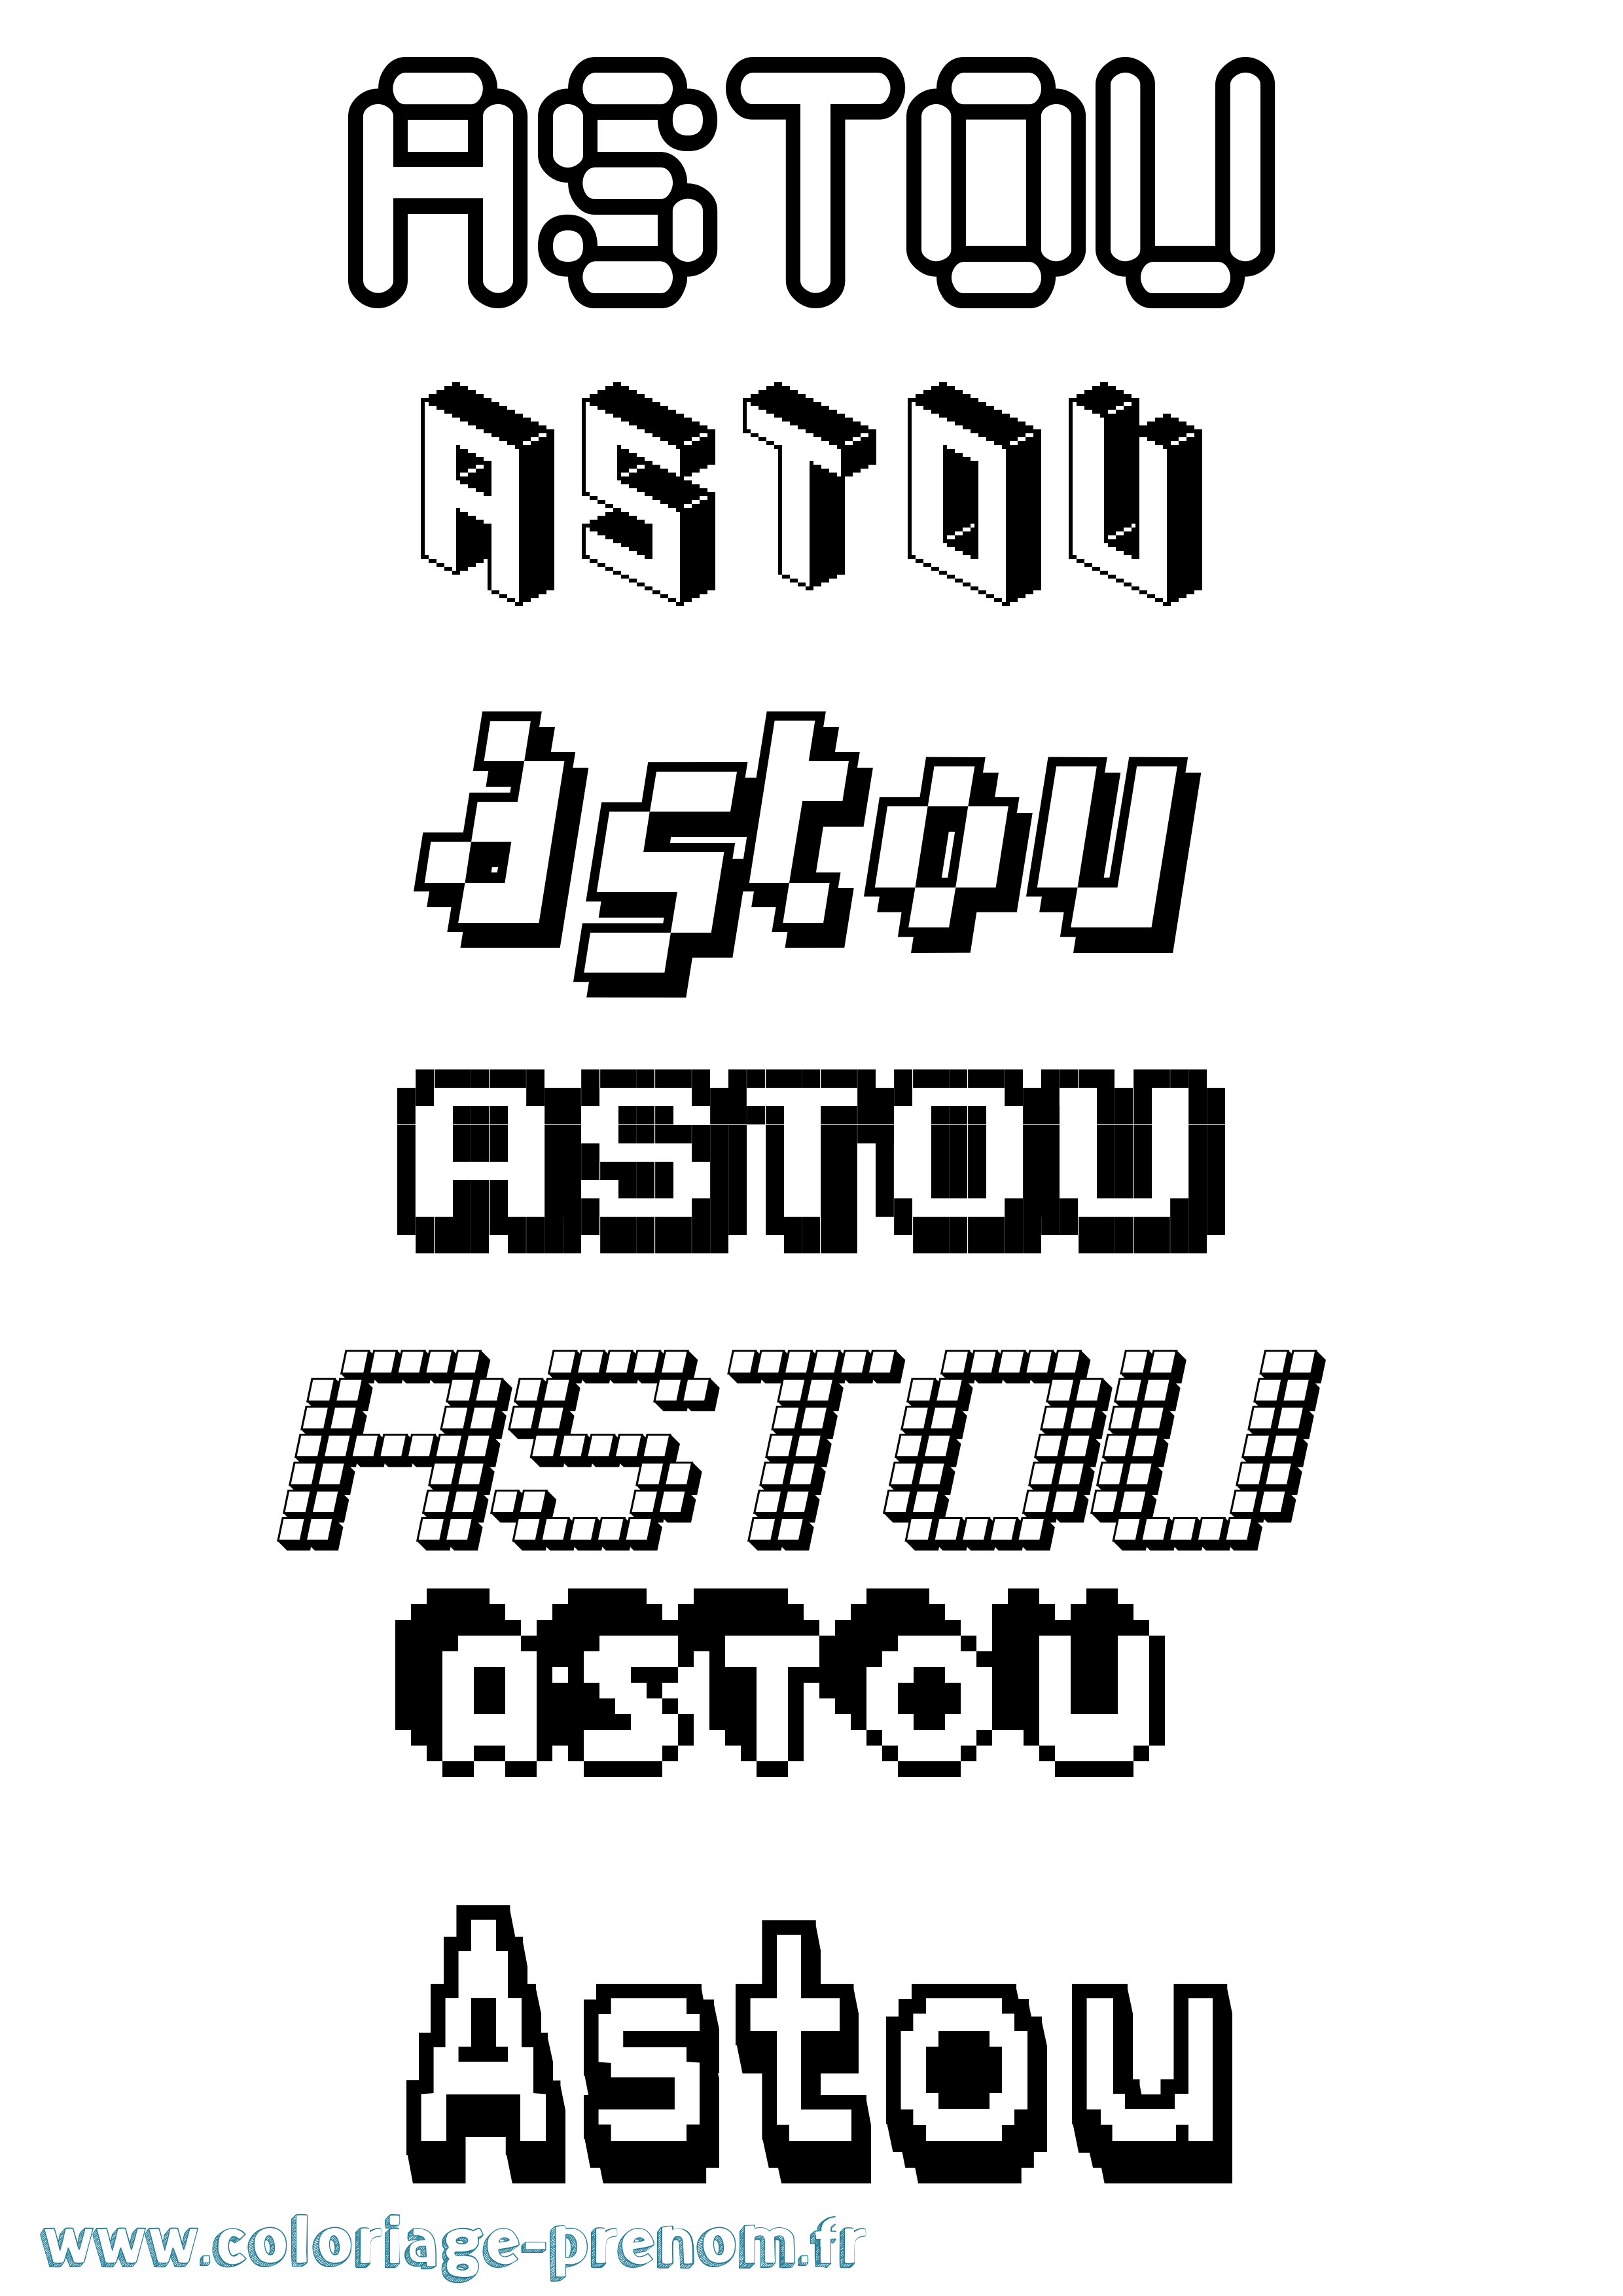 Coloriage prénom Astou Pixel